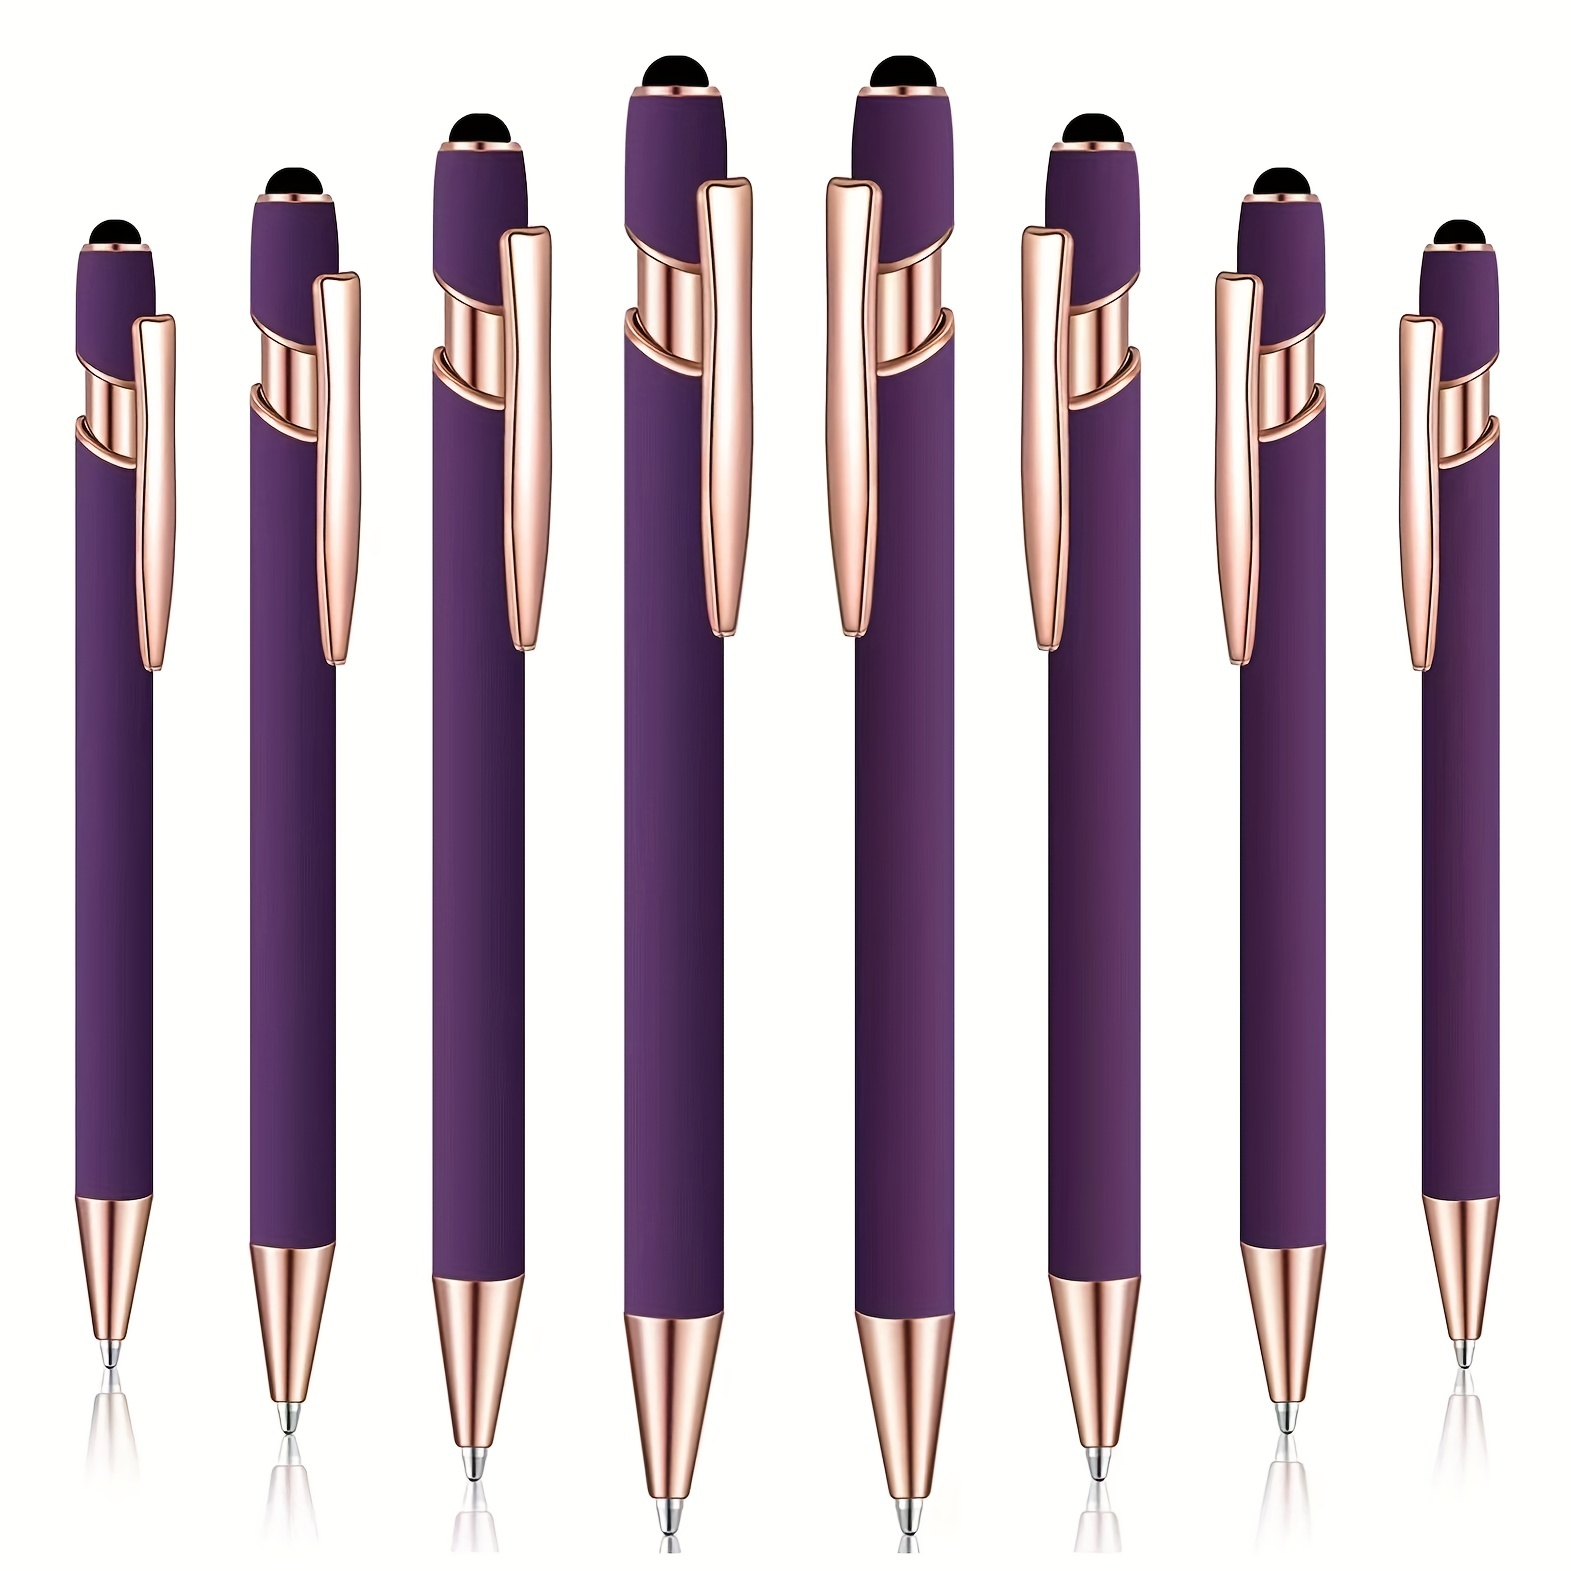 MUJI Pen Retractable GEL Ink Bollpoint Pens Smooth Writing Taste - 0.5mm  for sale online